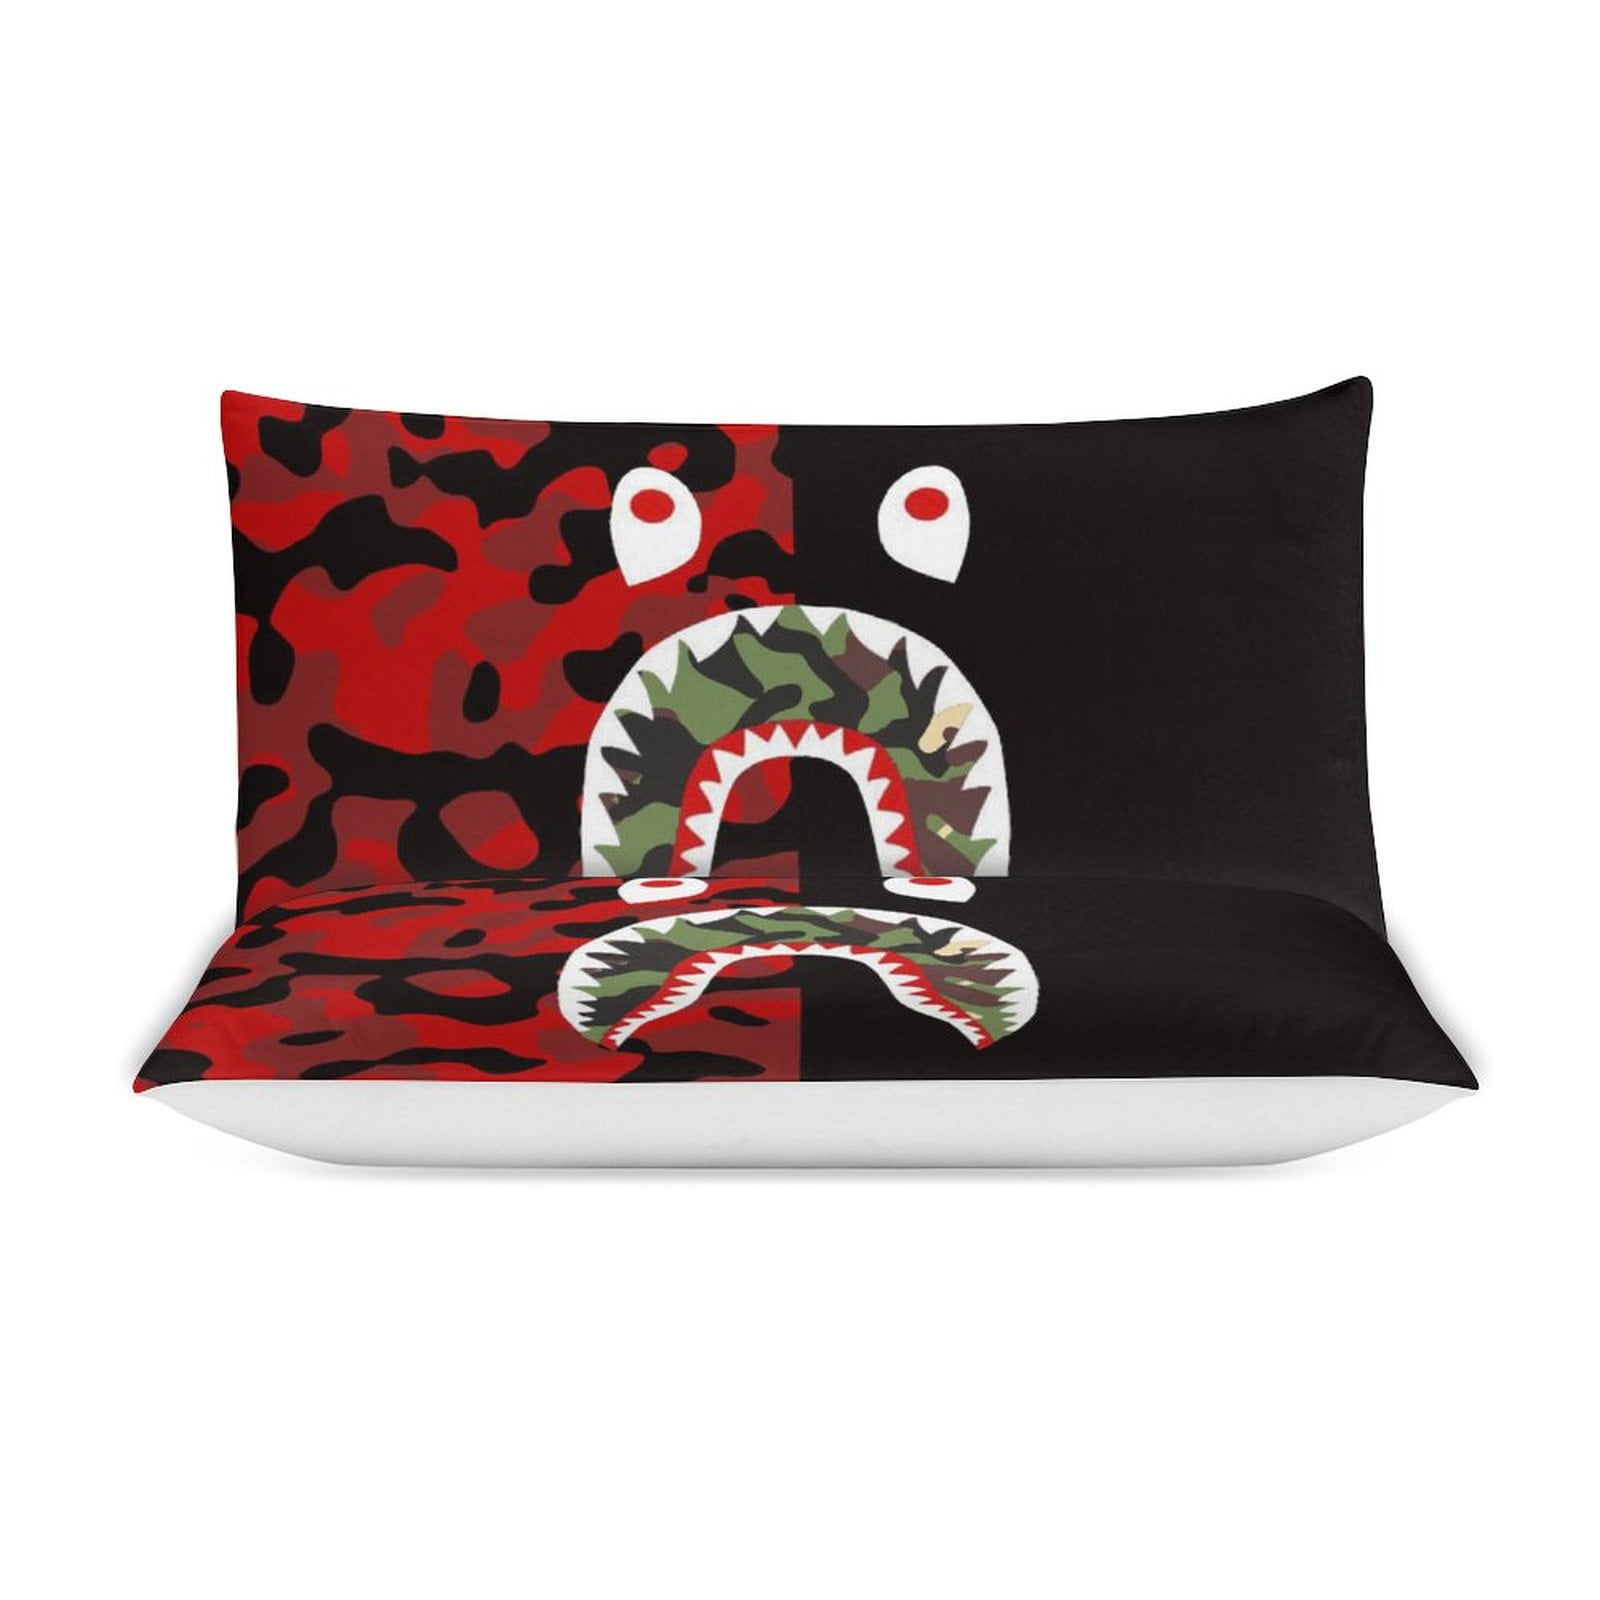 Black Red Bape Camo Pillow Case Army Camouflage Dakimakura